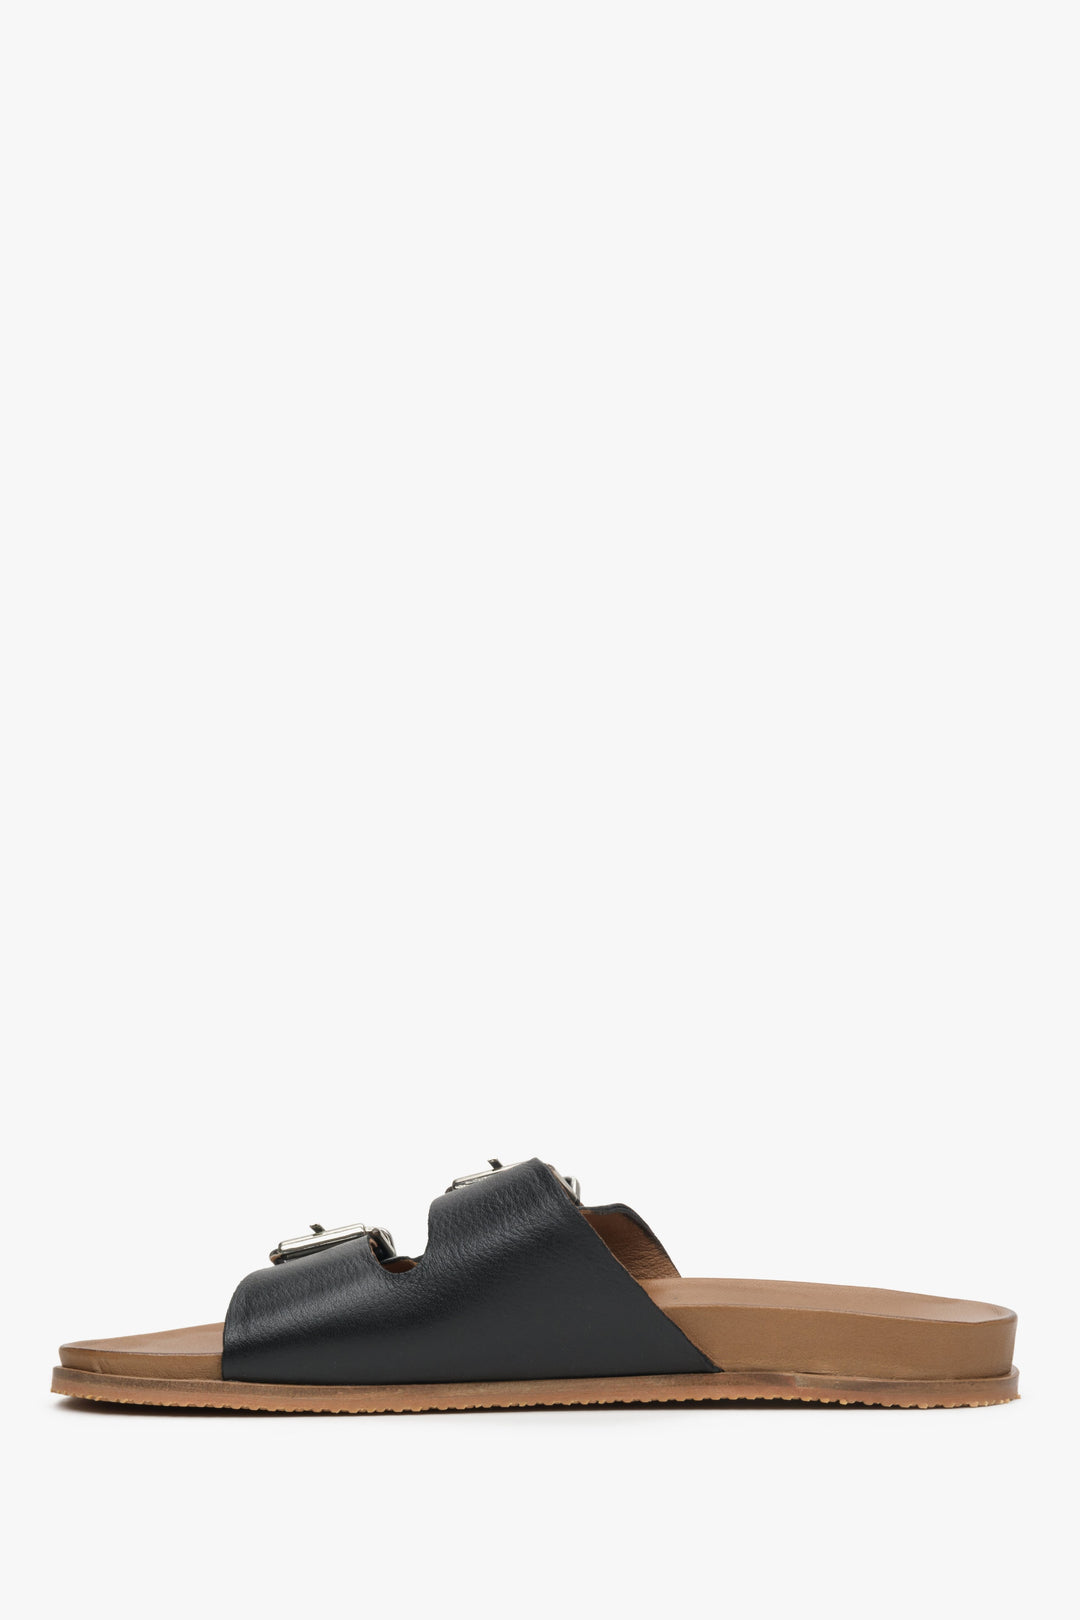 Women's black leather Estro slide sandals with thick straps - shoe profile.